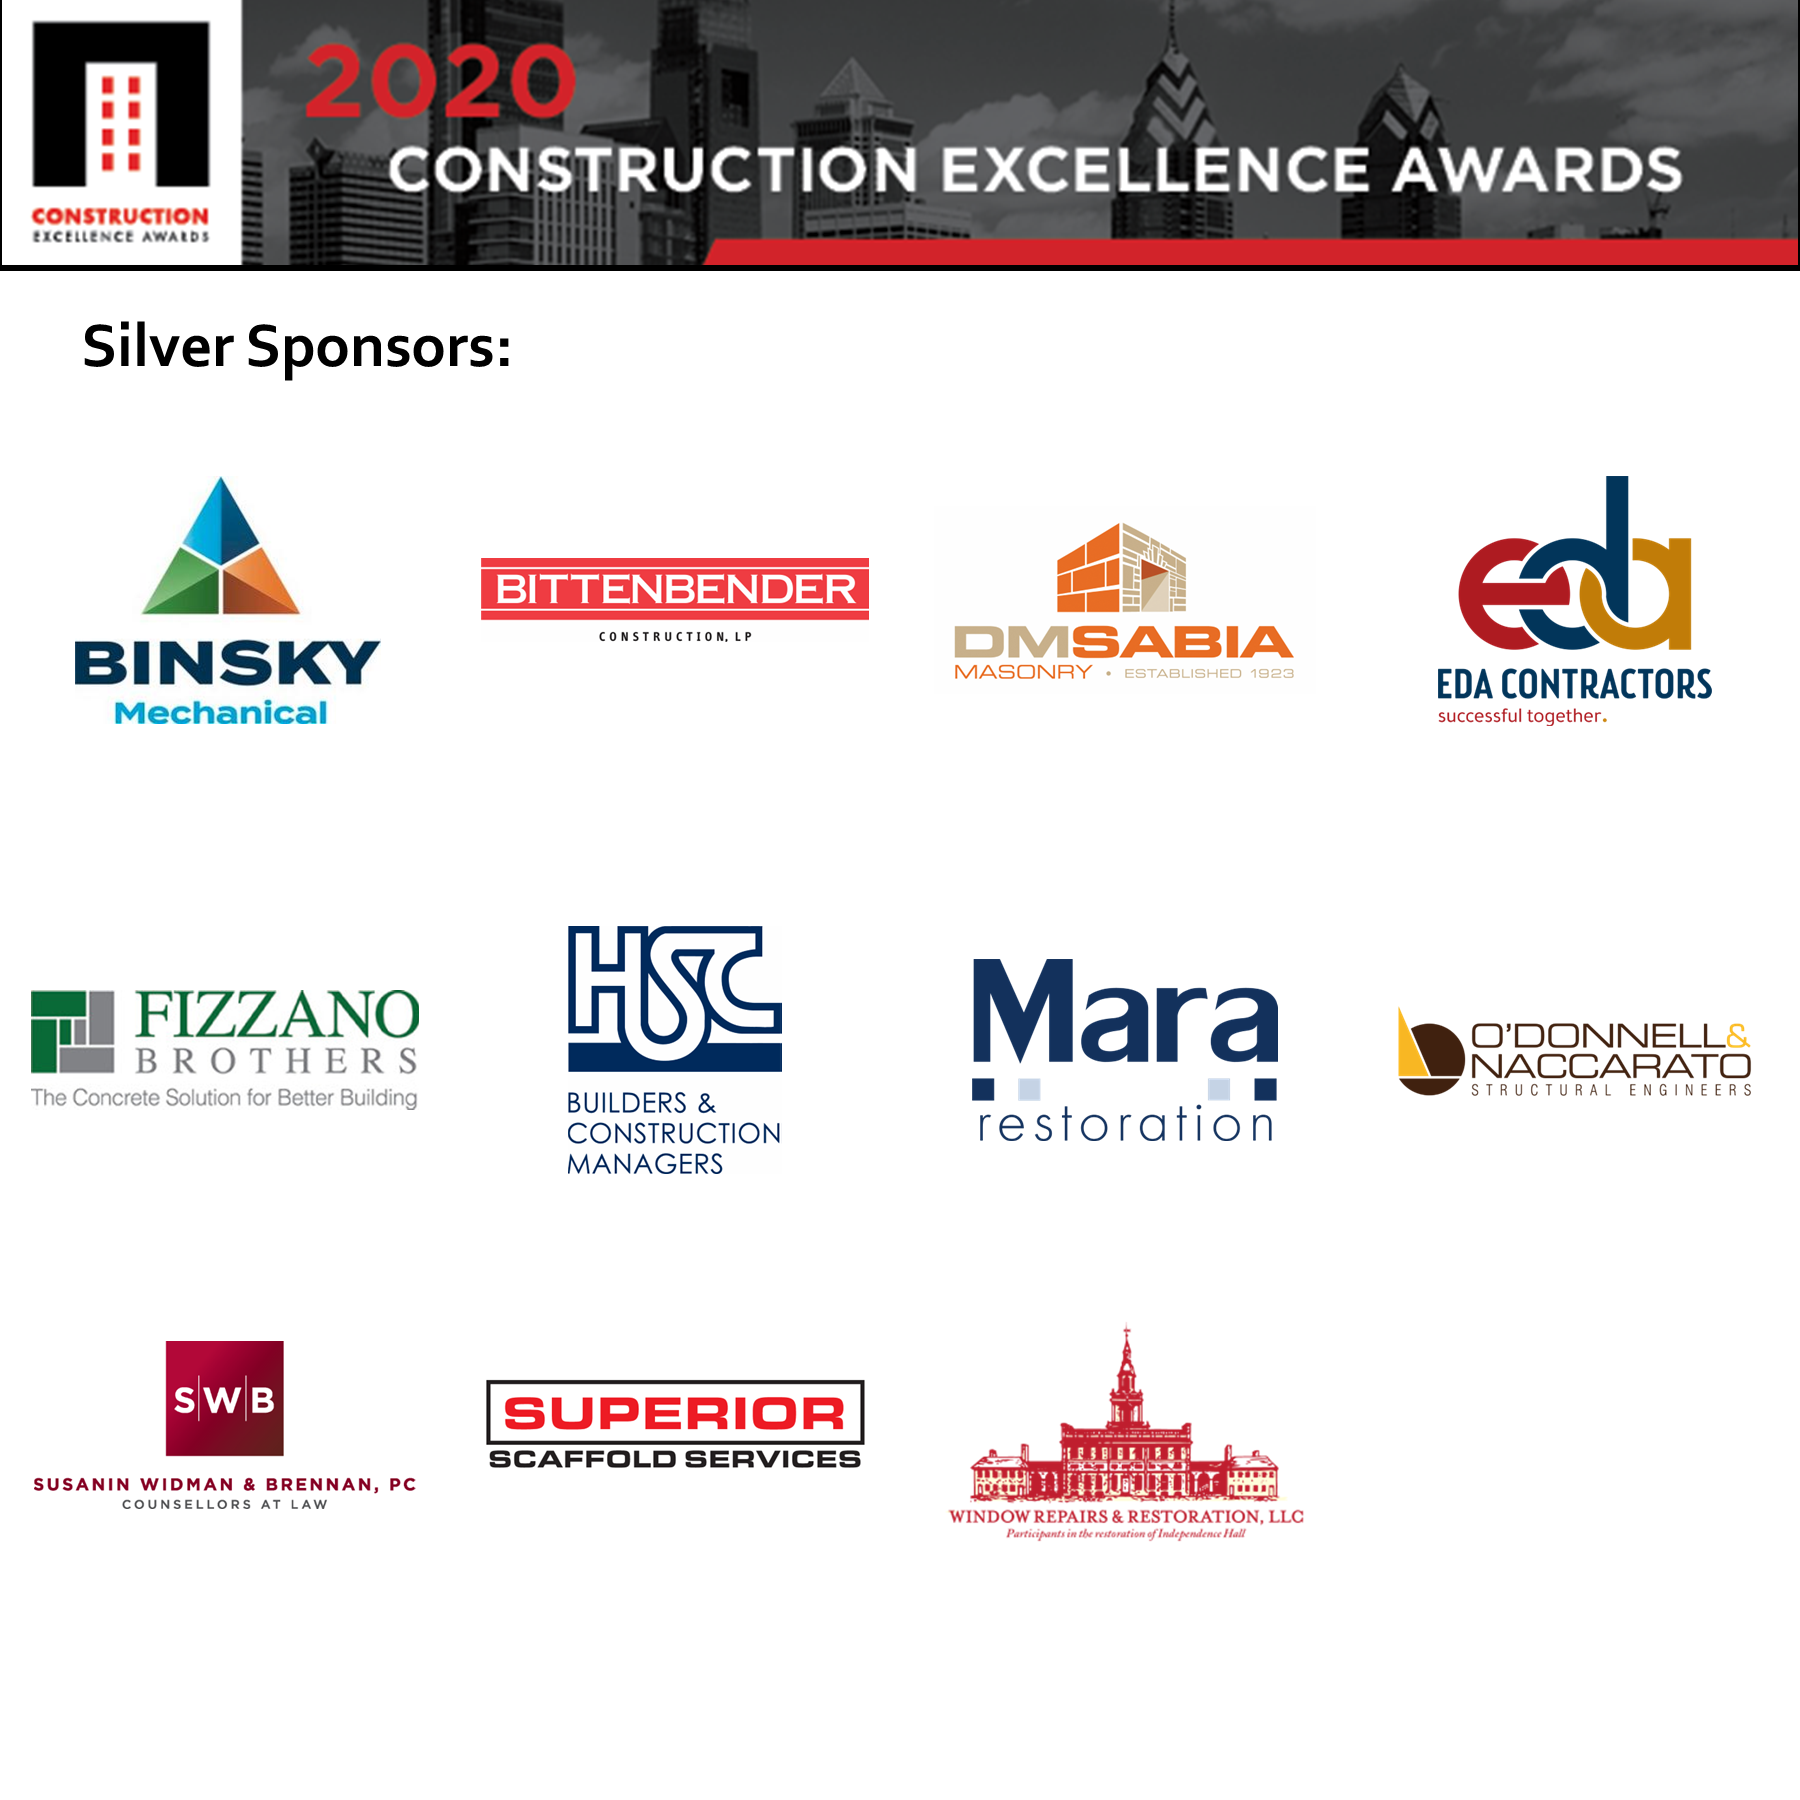 PBJ Spotlights the 2020 Construction Excellence Awards